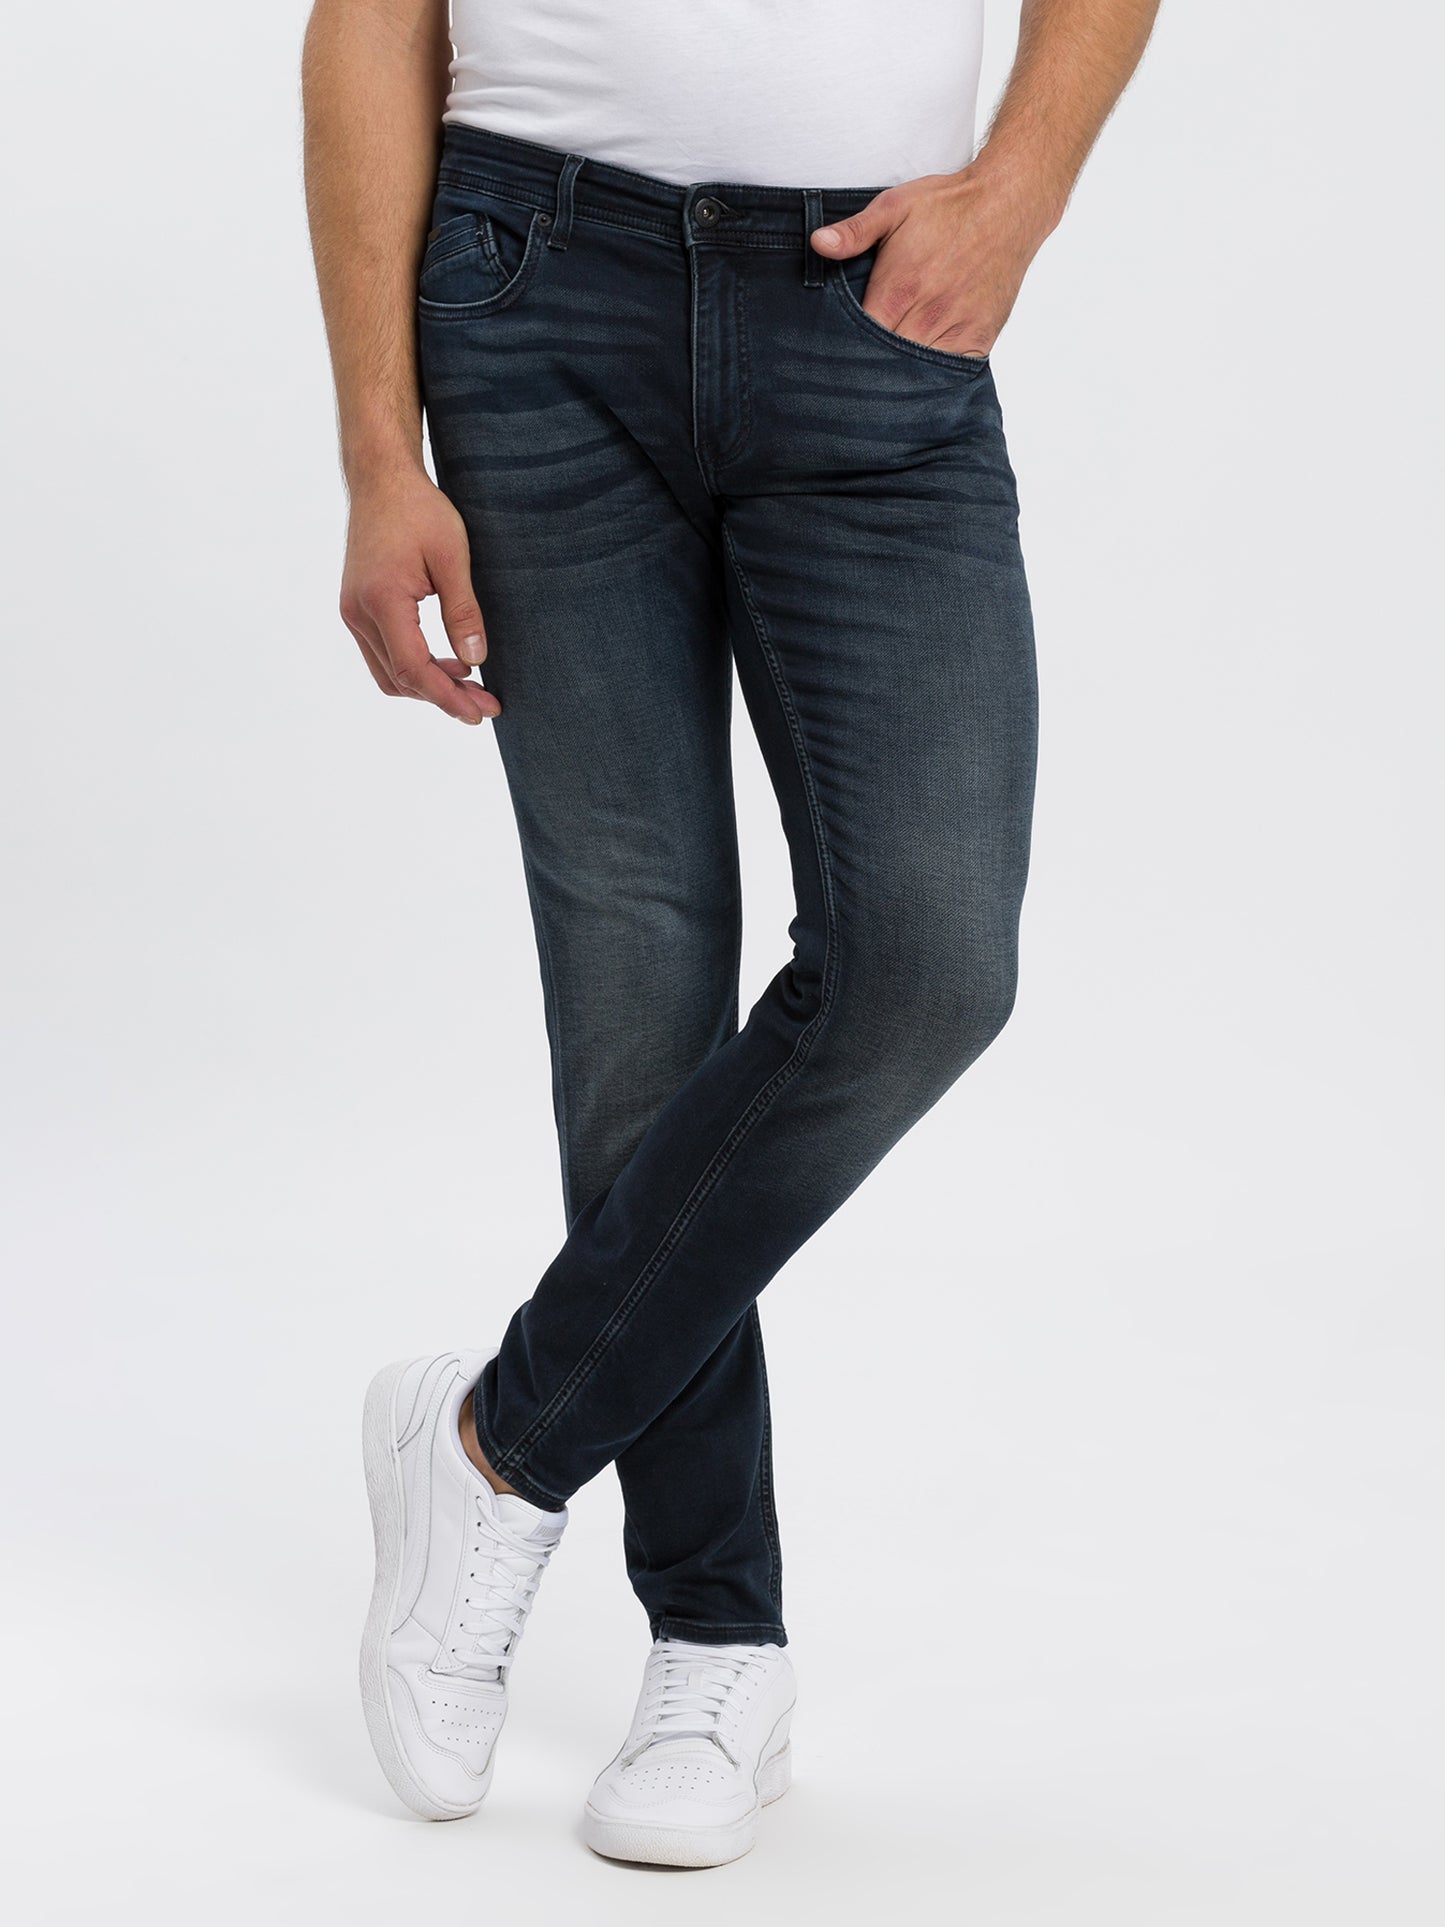 Jimi Herren Jeans Slim Fit Regular Waist Tapered Leg schwarzblau